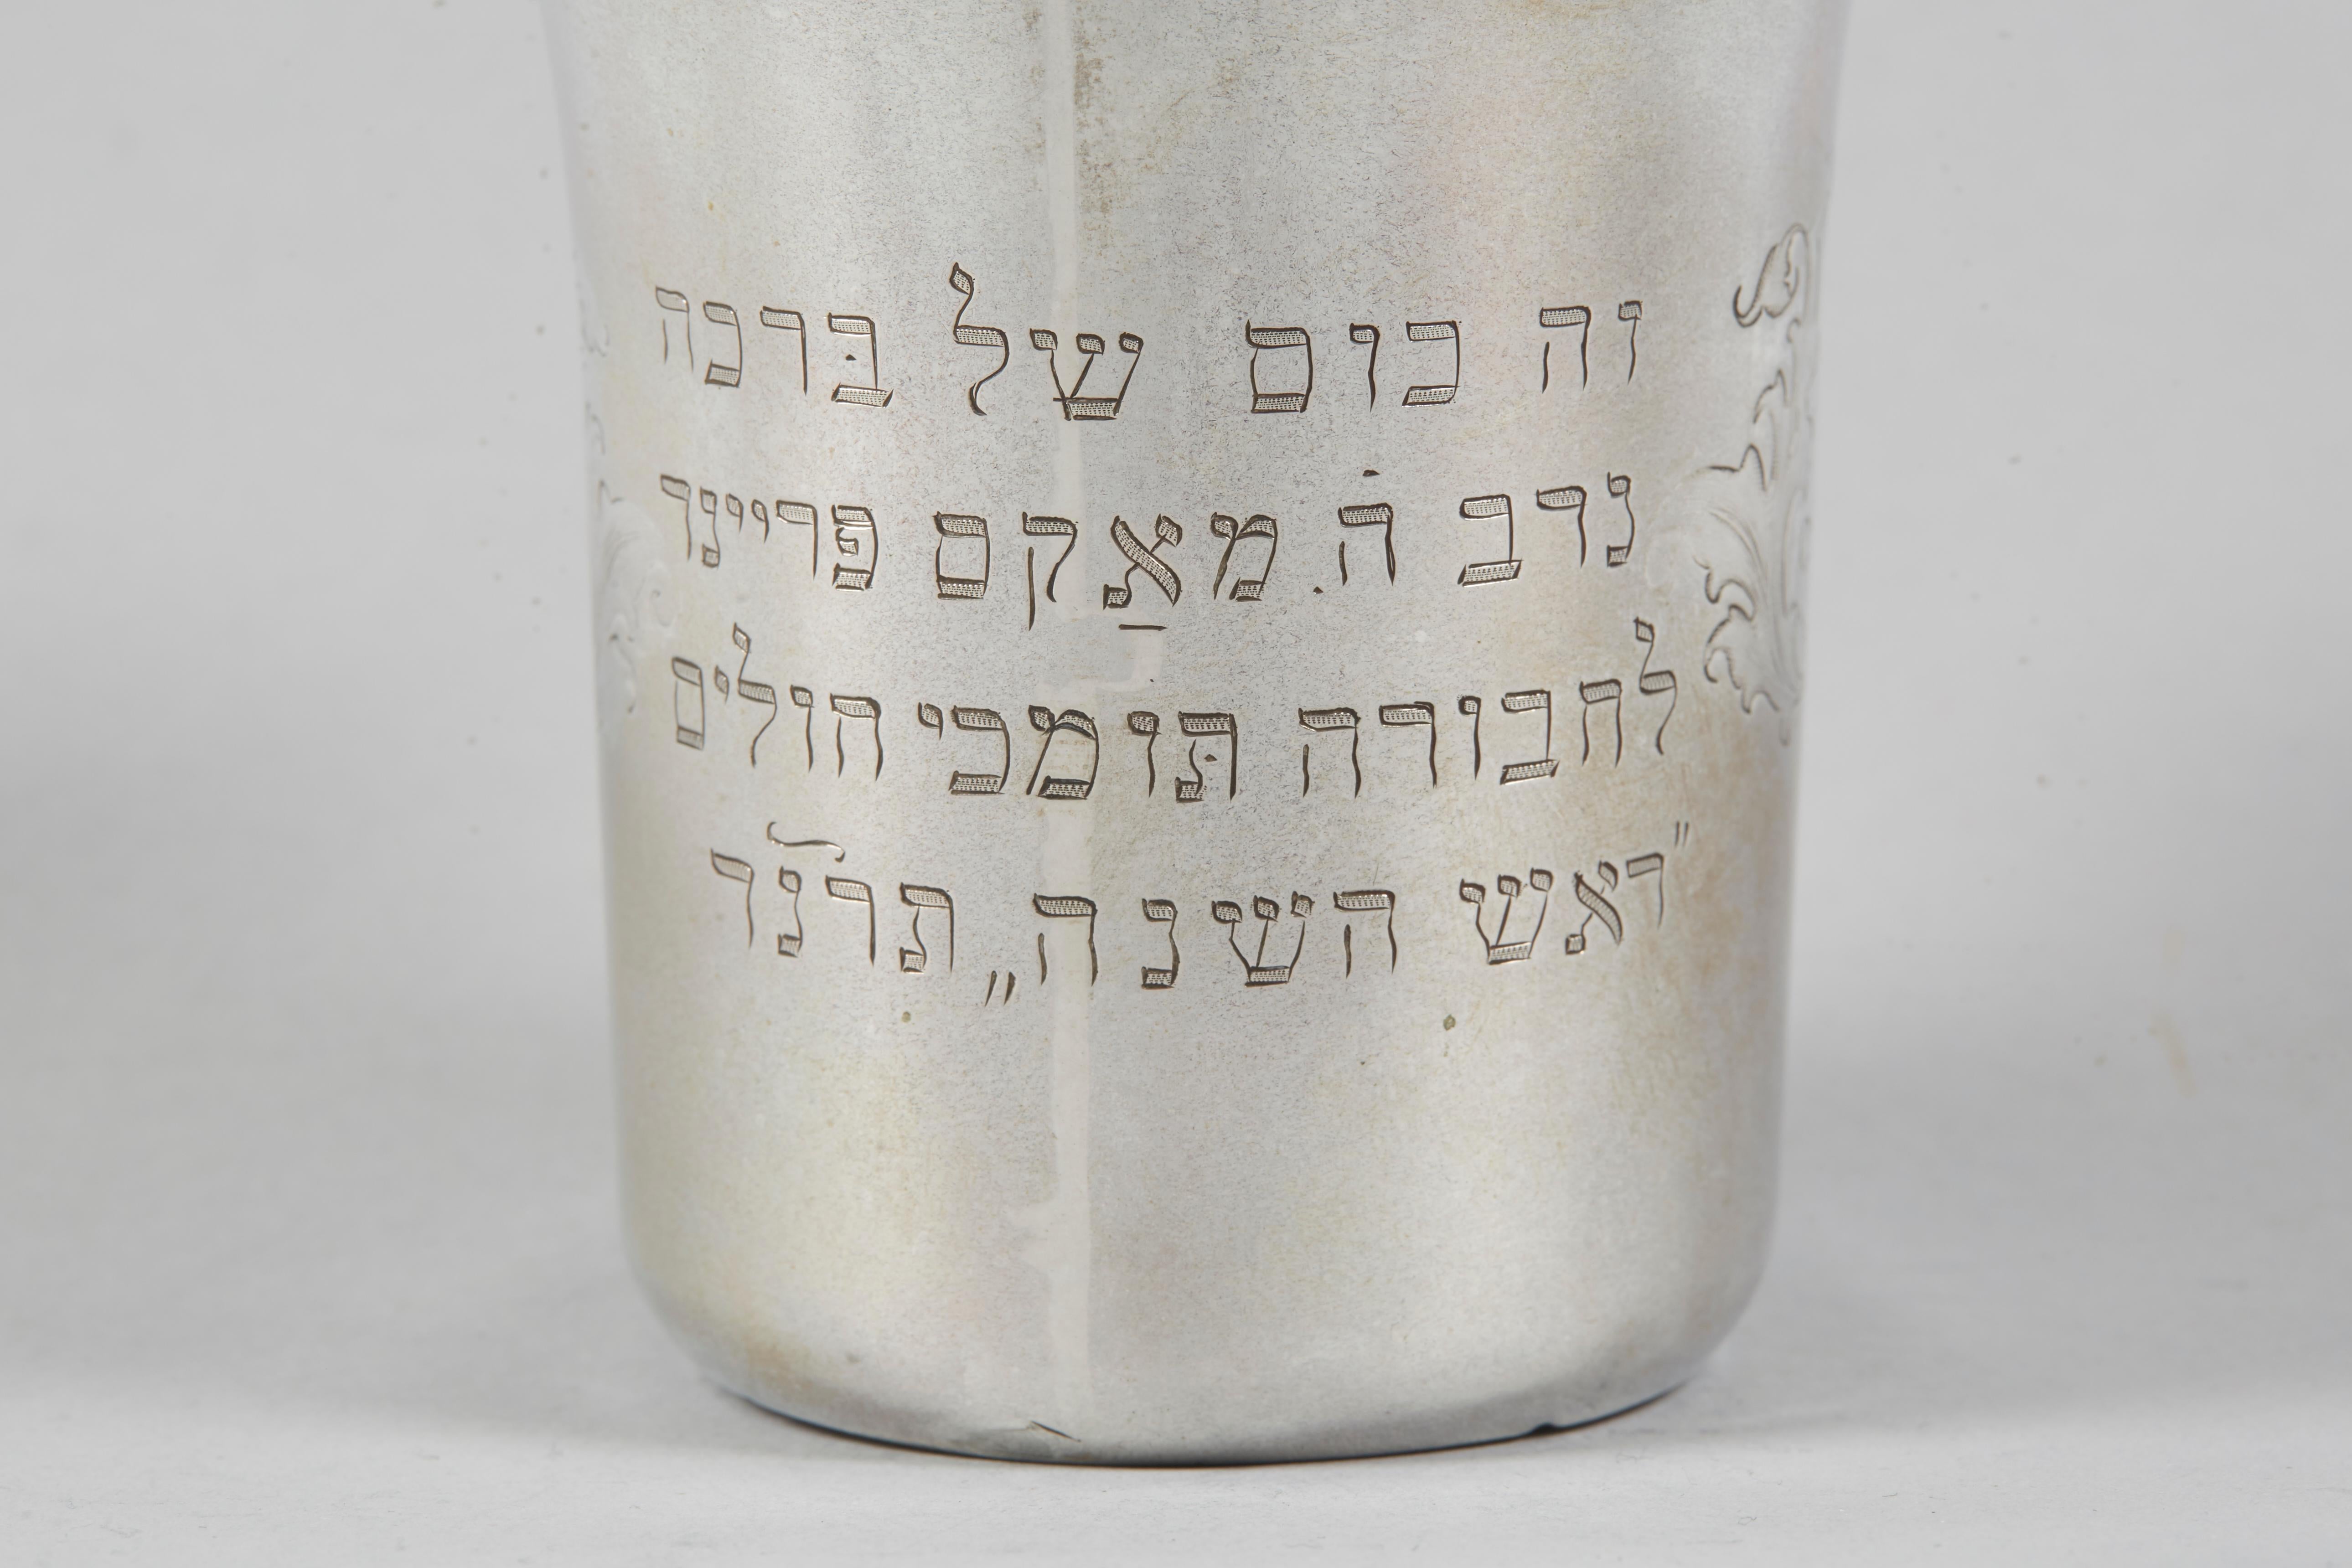 Handgravierter Kiddusch-Becher aus Silber, 1893.
Graviert mit hebräischem Text: 